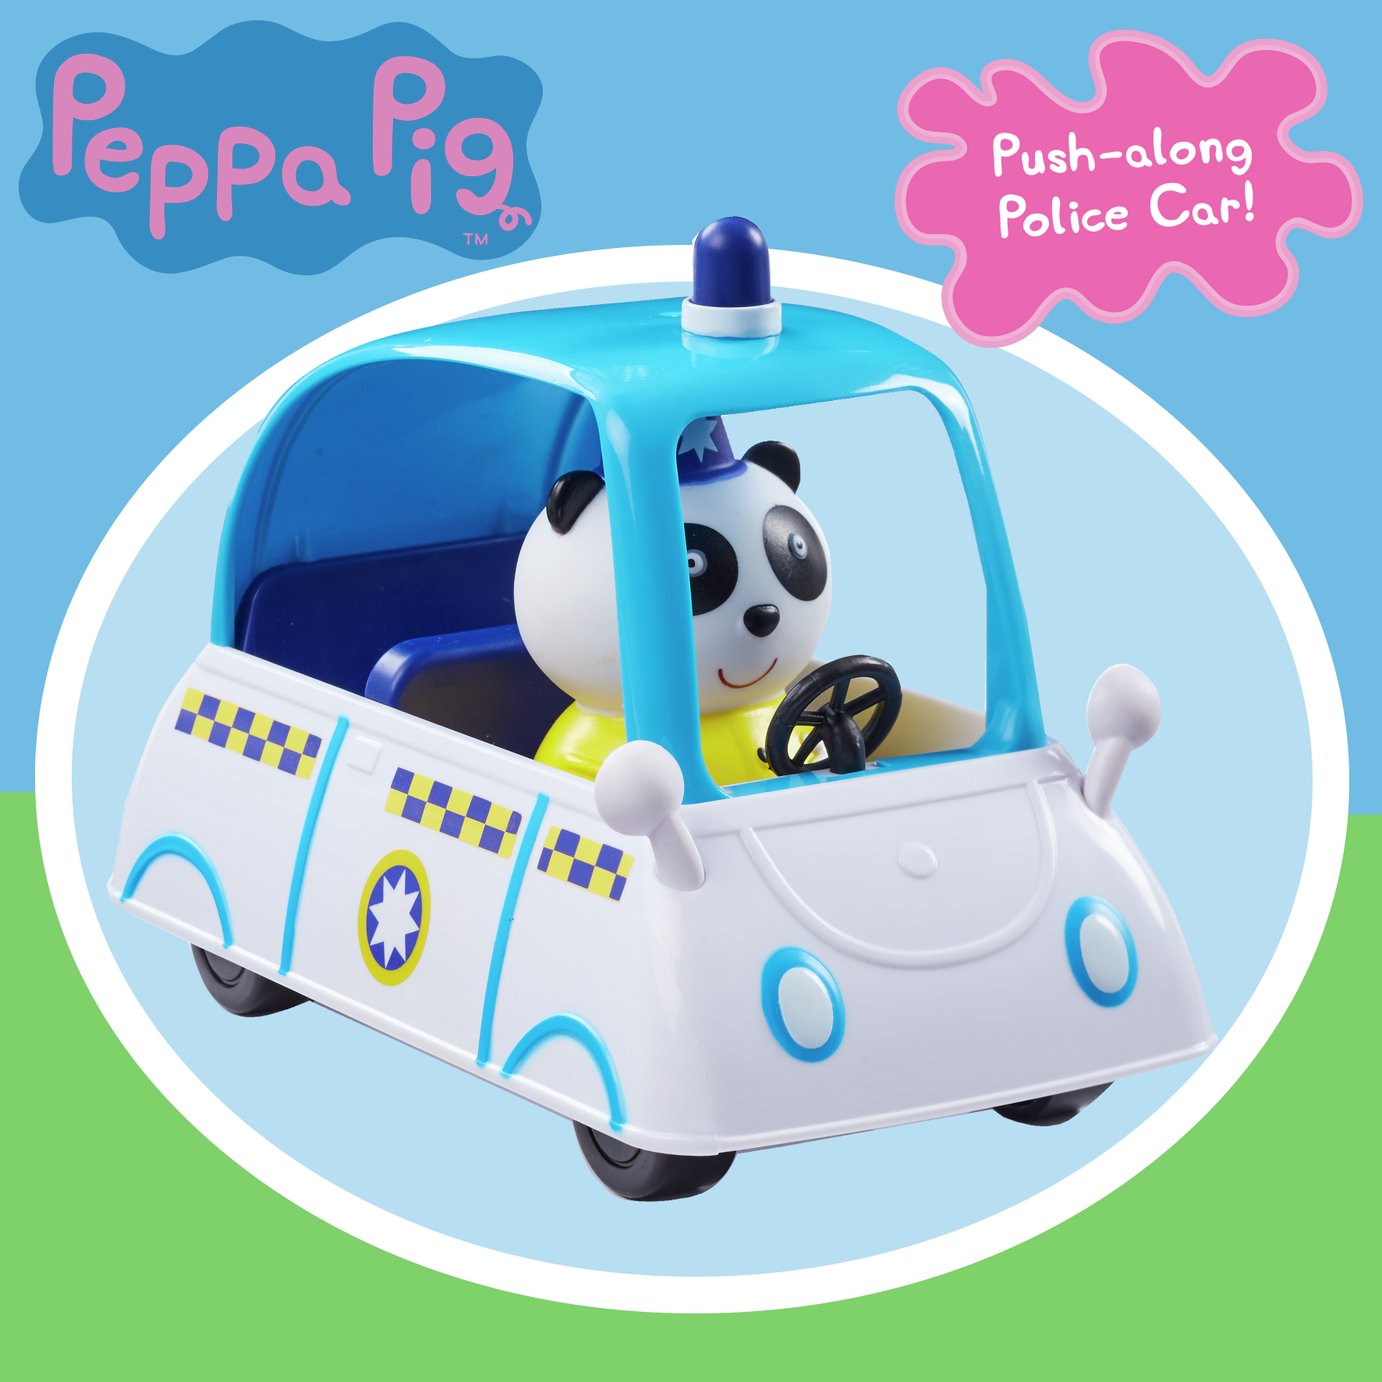 Peppa Pig Police Car